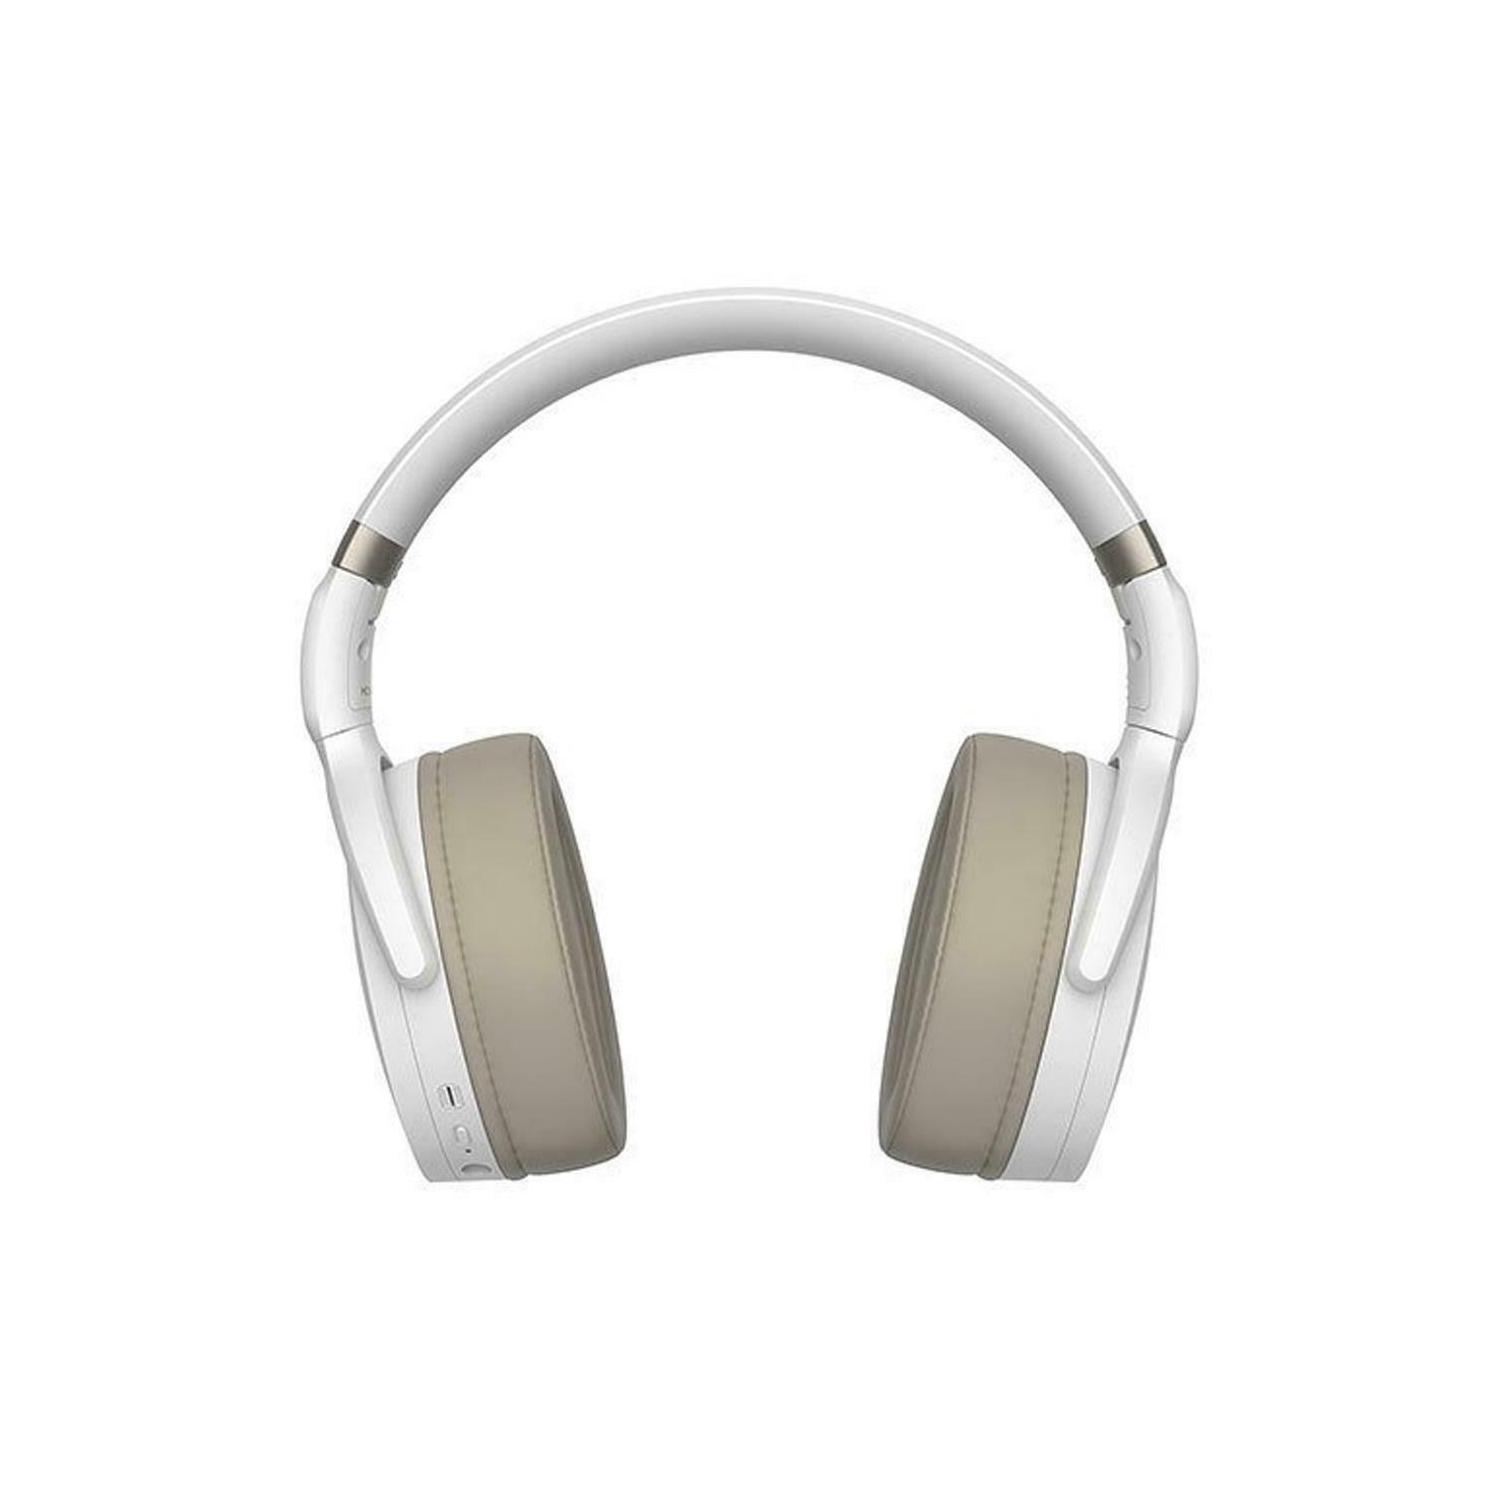 Refurbished (Excellent) - Sennheiser HD 450BT Over-Ear Noise Cancelling Bluetooth Headphones - Certified Refurbished